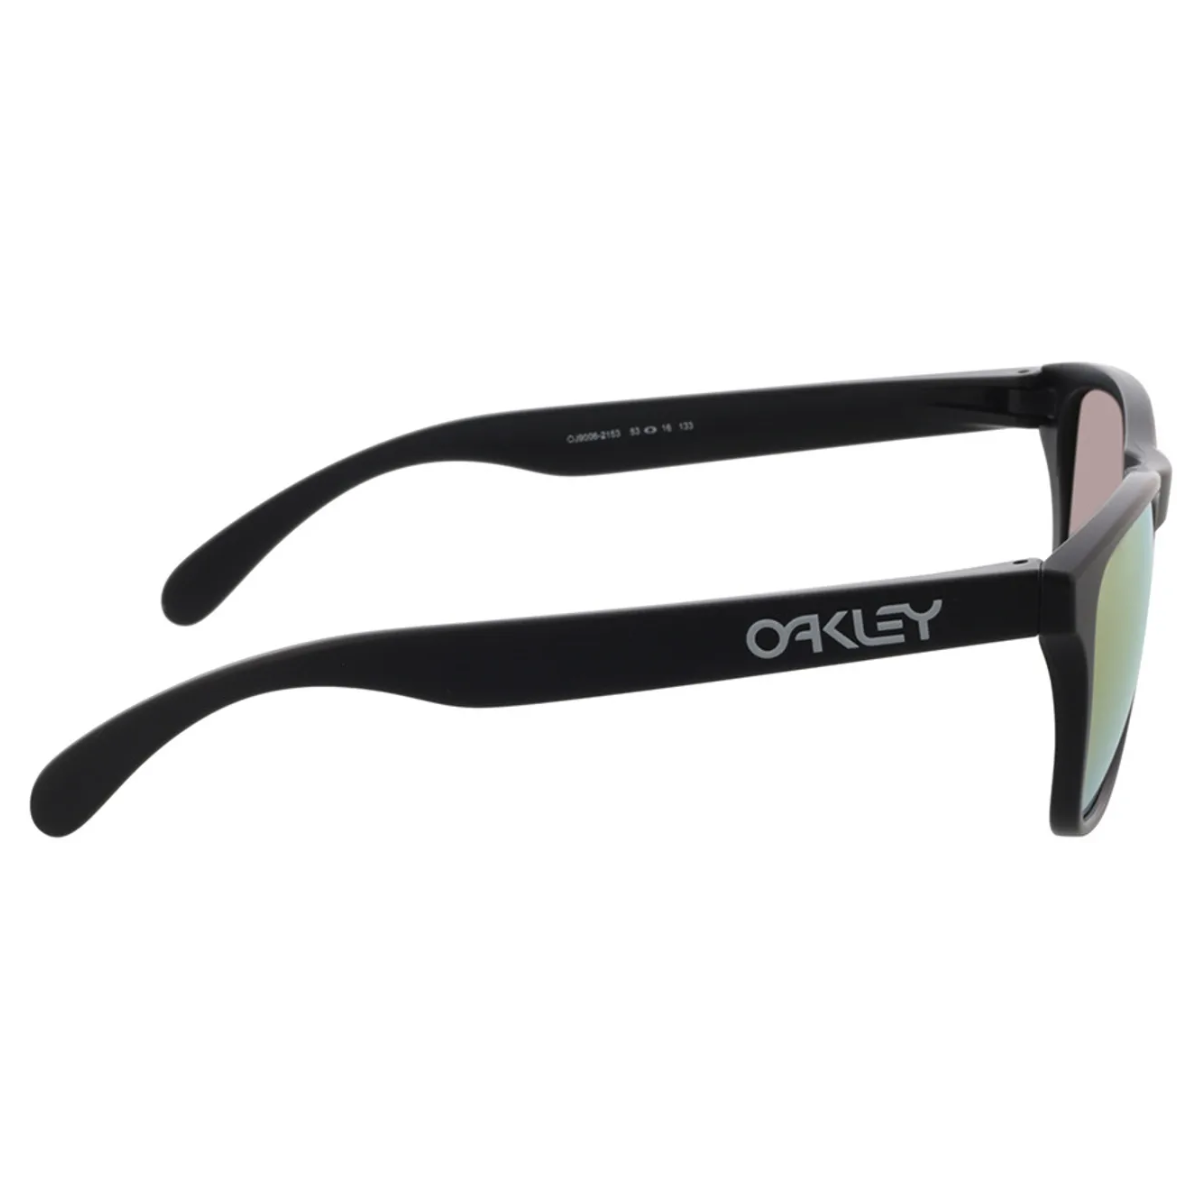 Oakley 9006 Sunglass